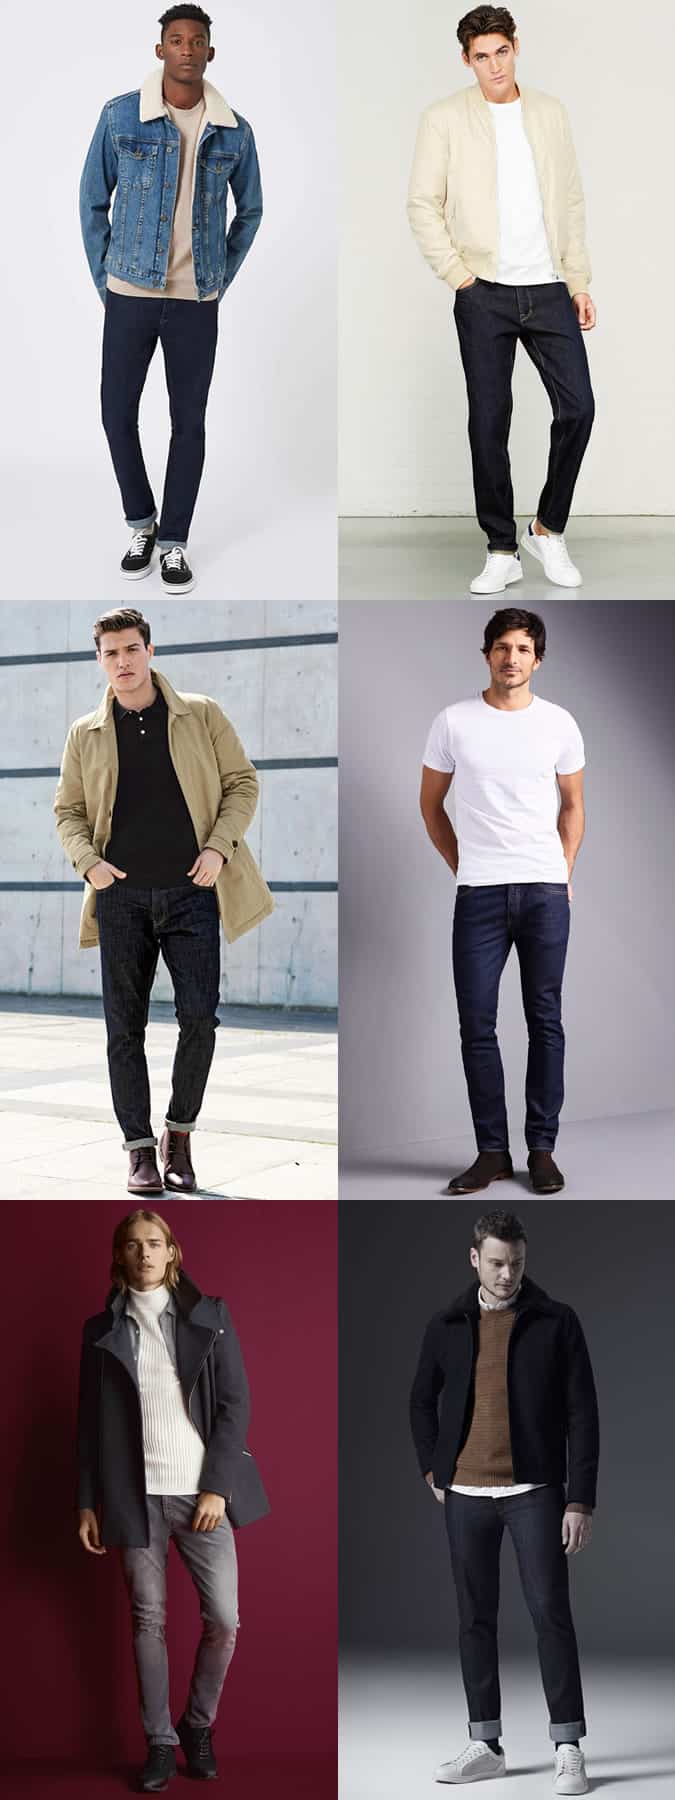 Men's Dark Wash Jeans Outfit Inspiration Lookbook